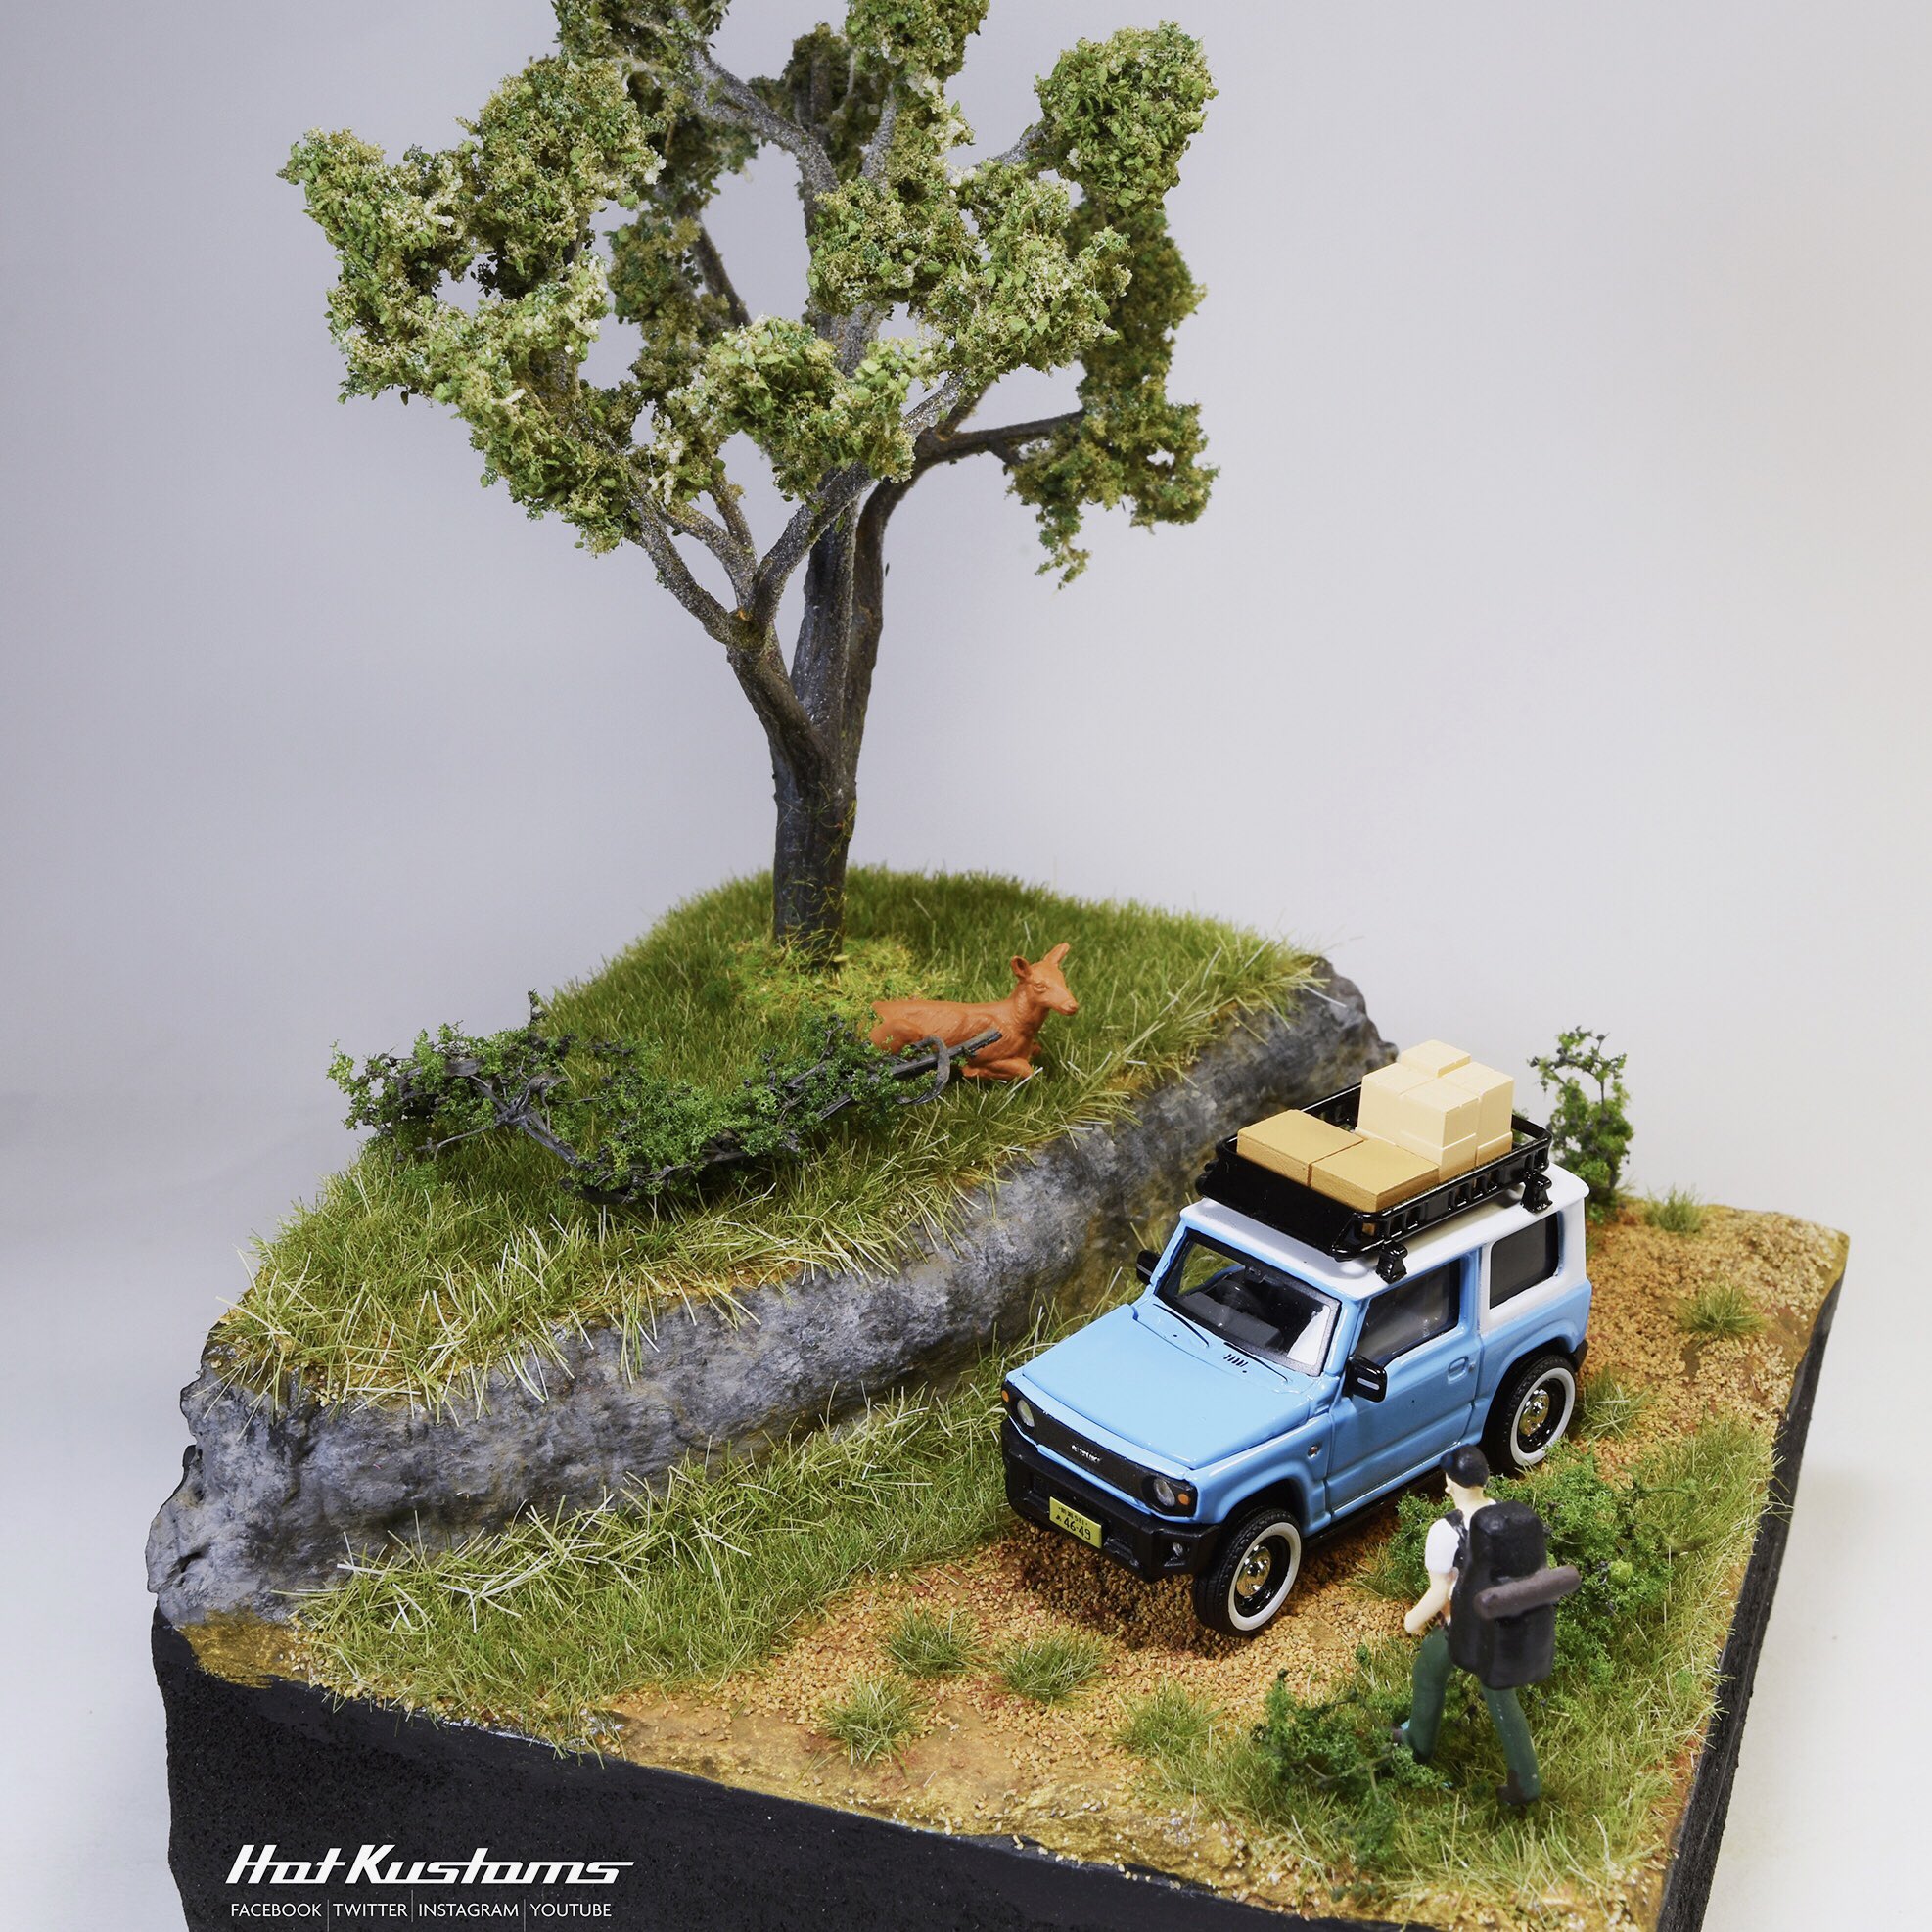 Hot Kustoms on X: “Need a ride?” 5x5” mini nature diorama